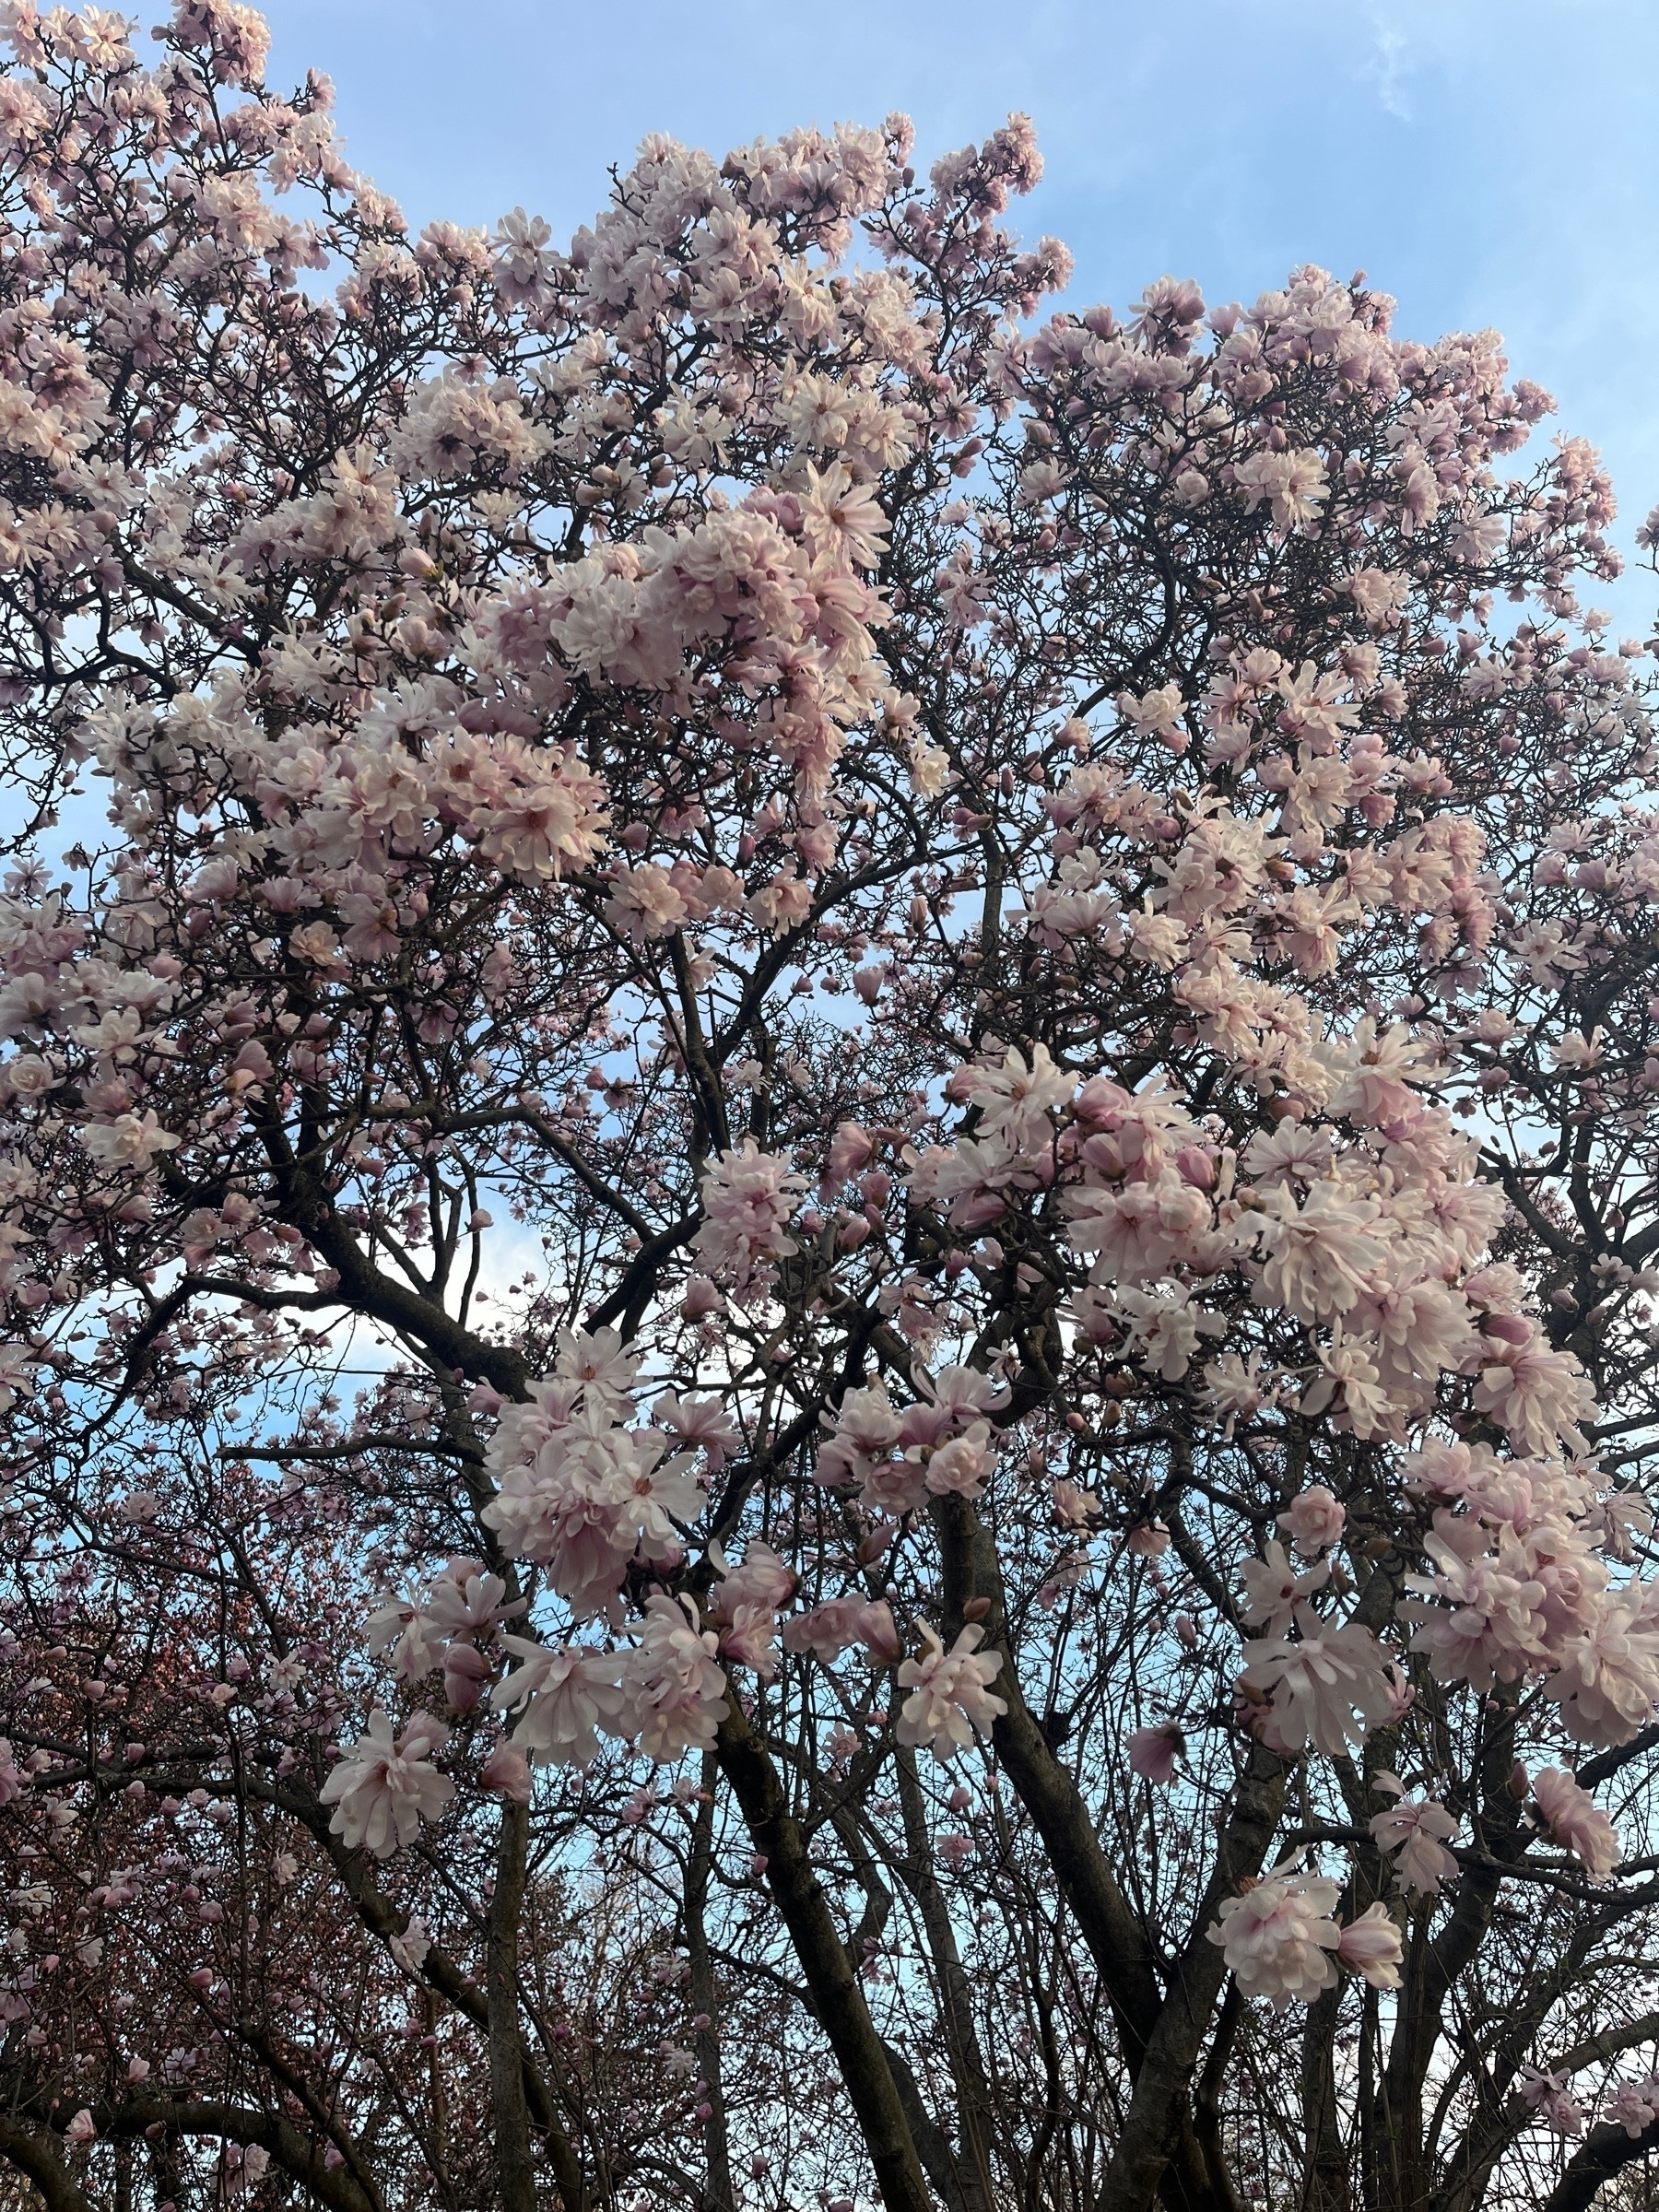 Flowering tree against blue sky background